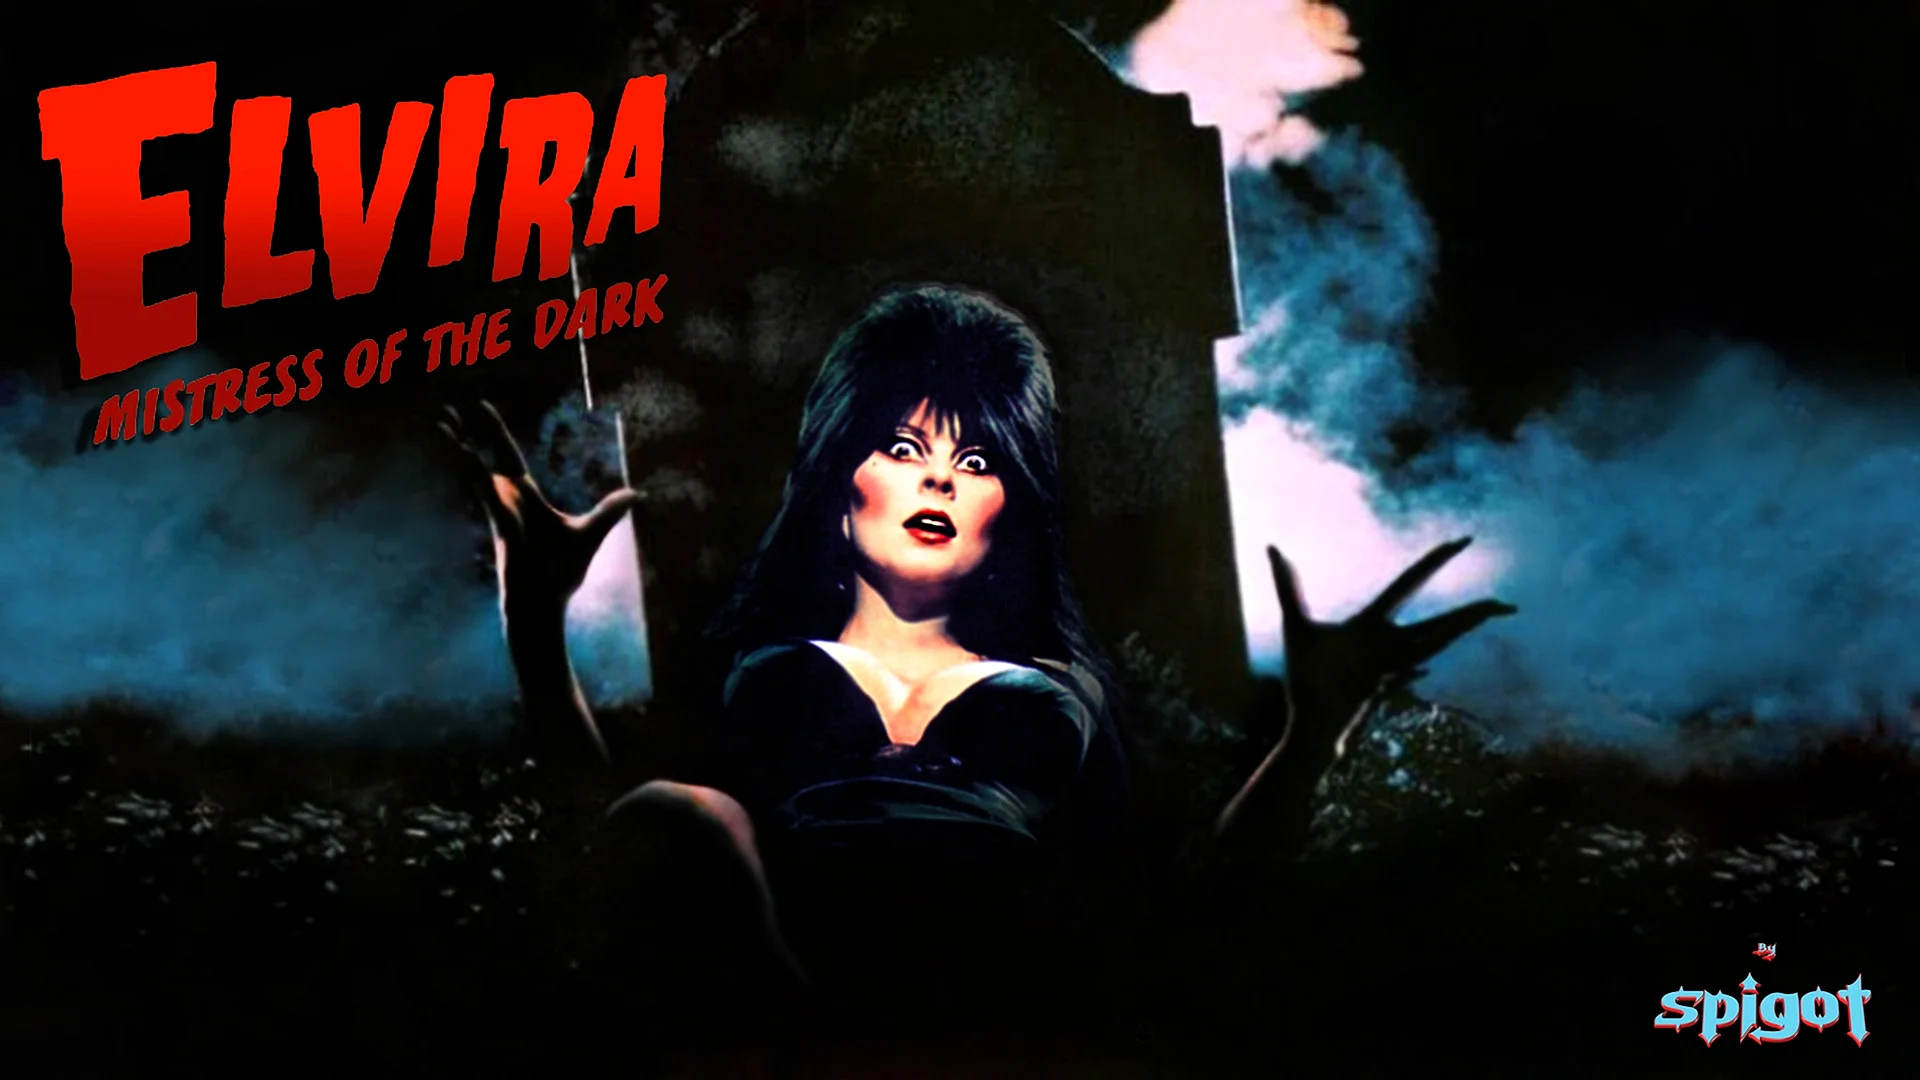 Elvira Mistress Of The Dark Poster Wallpaper